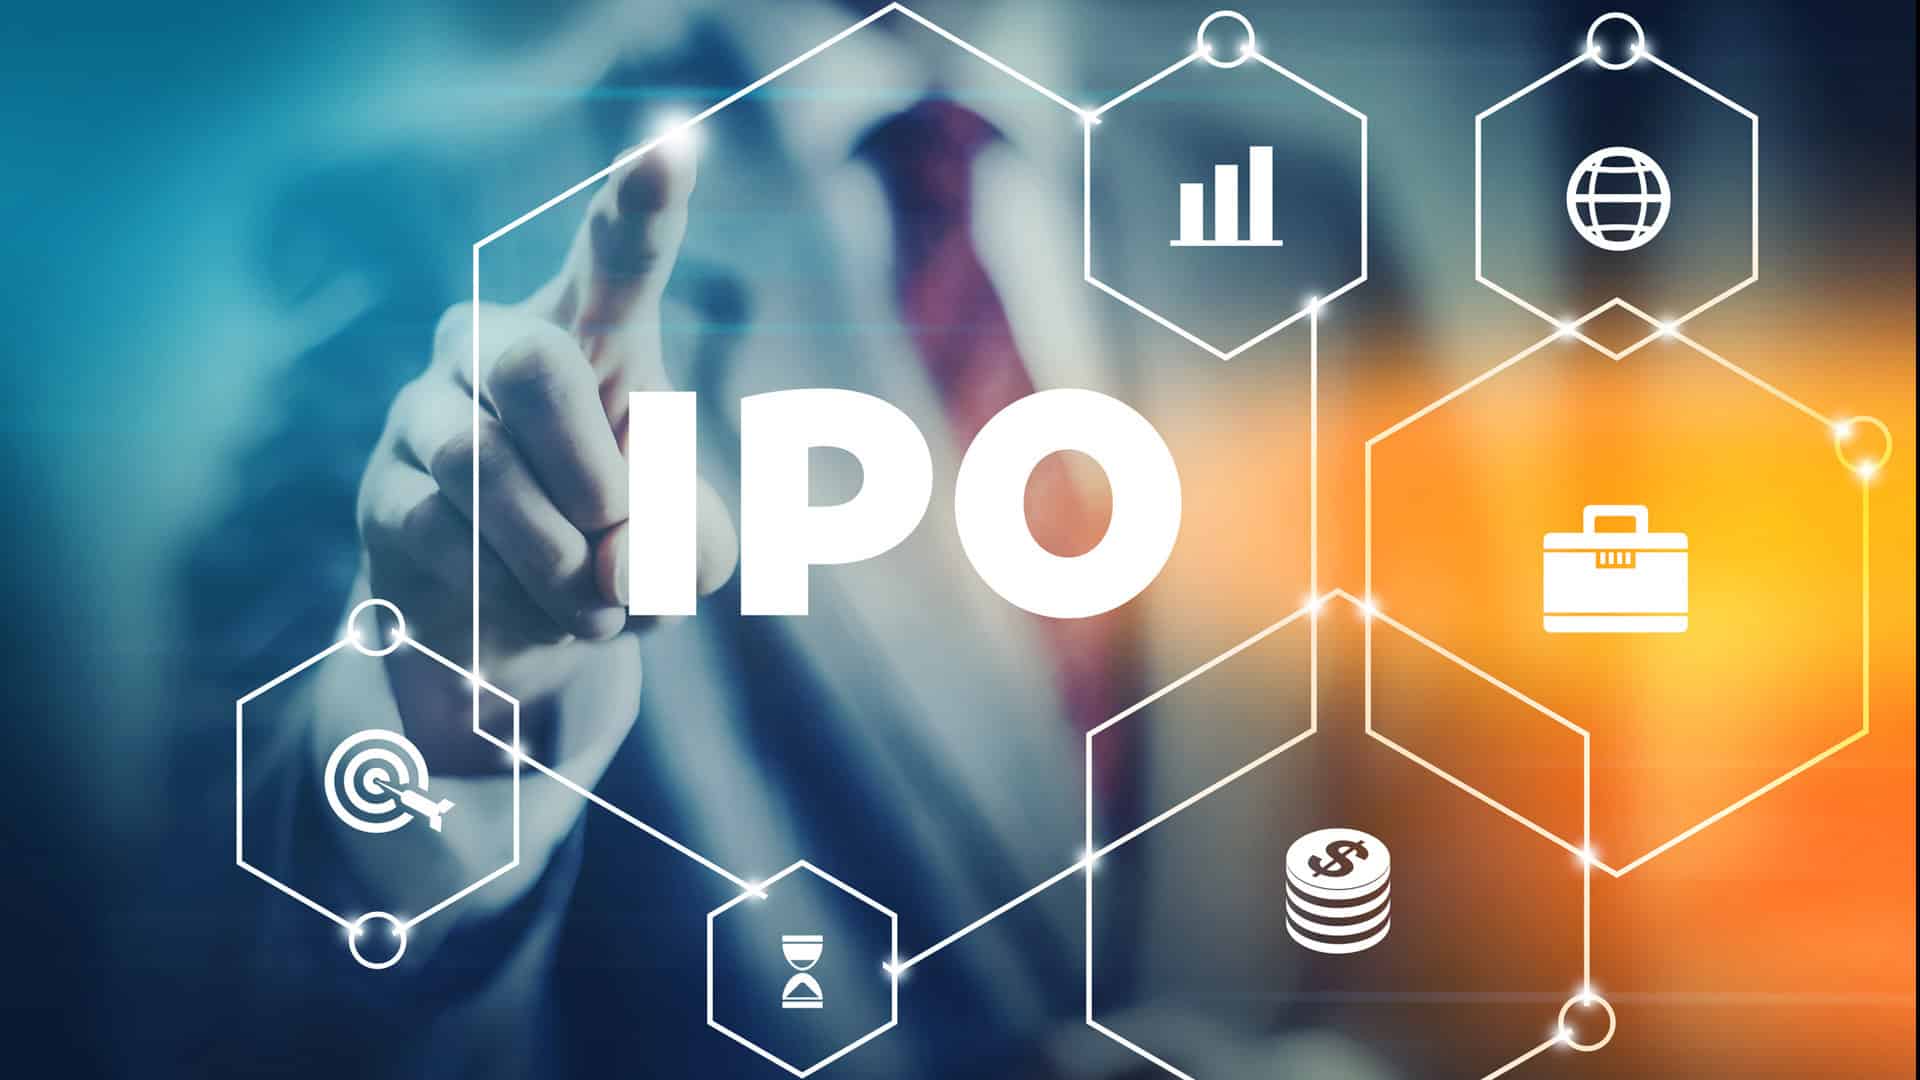 Fabindia scraps IPO plans considering present market situation